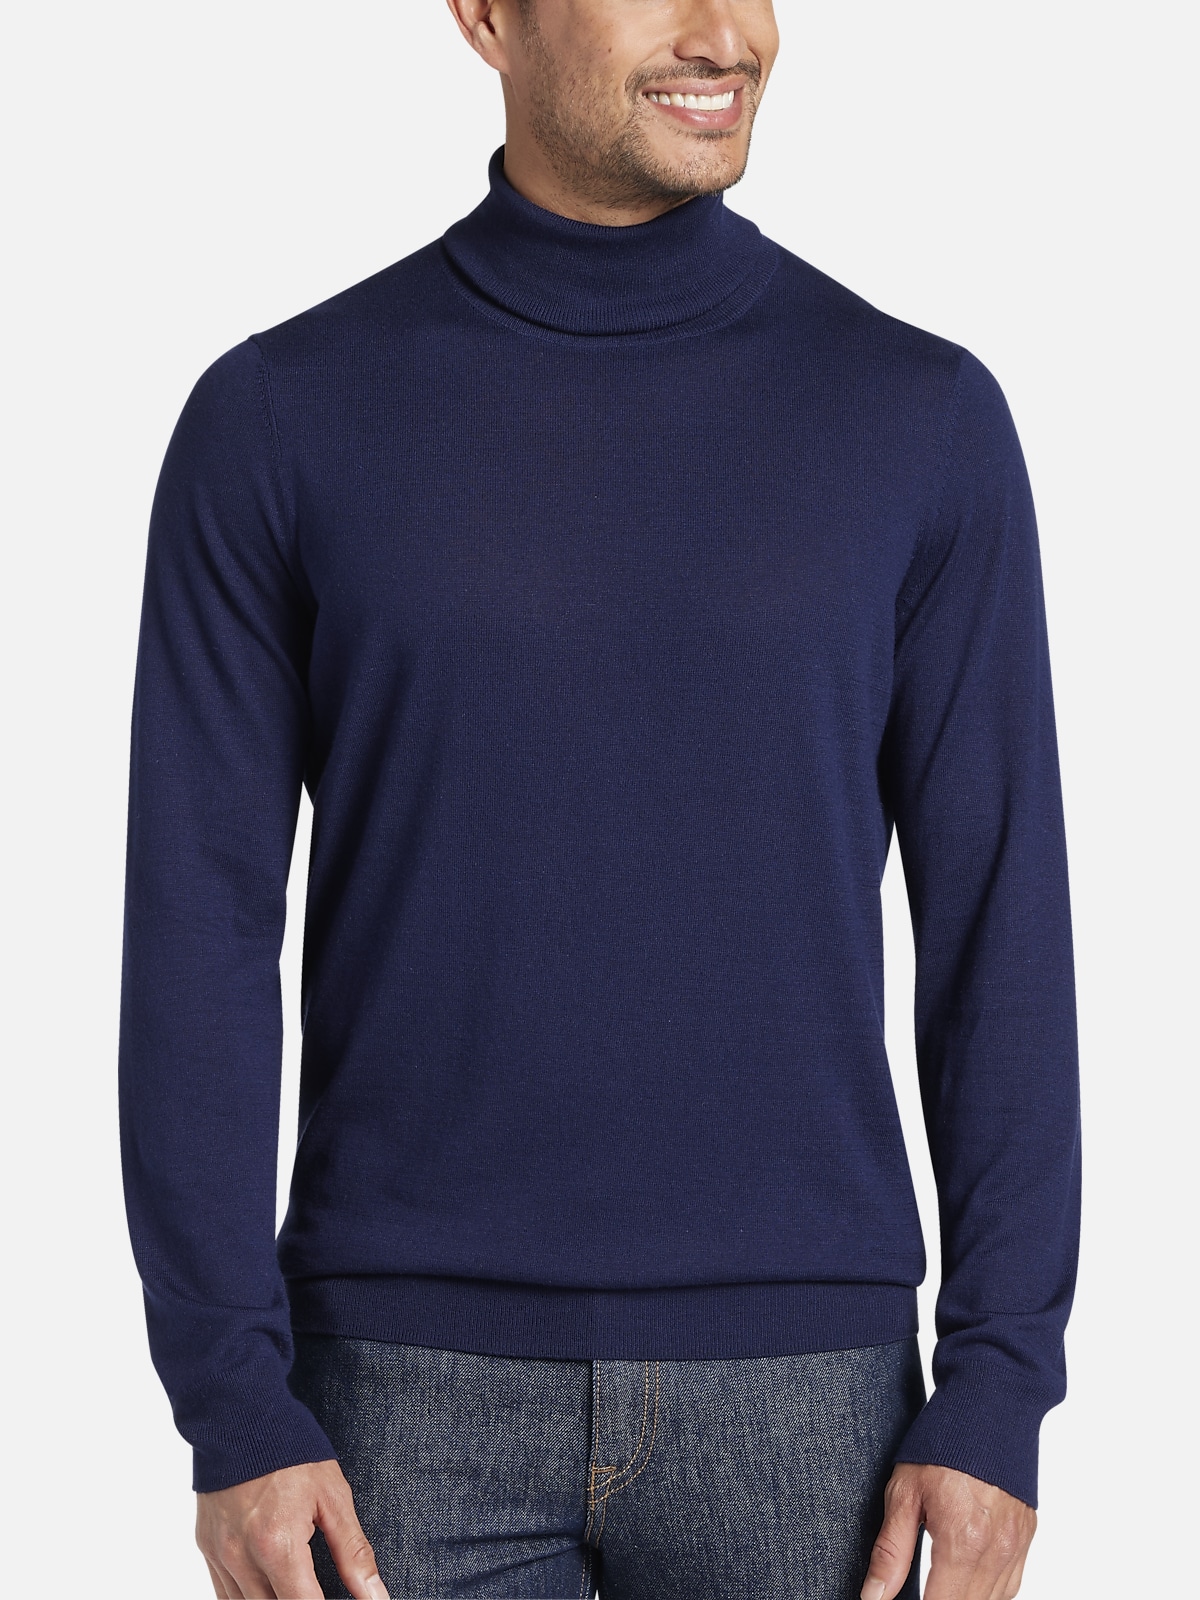 Michael Strahan Modern Fit Turtleneck Sweater | New Arrivals| Men's ...